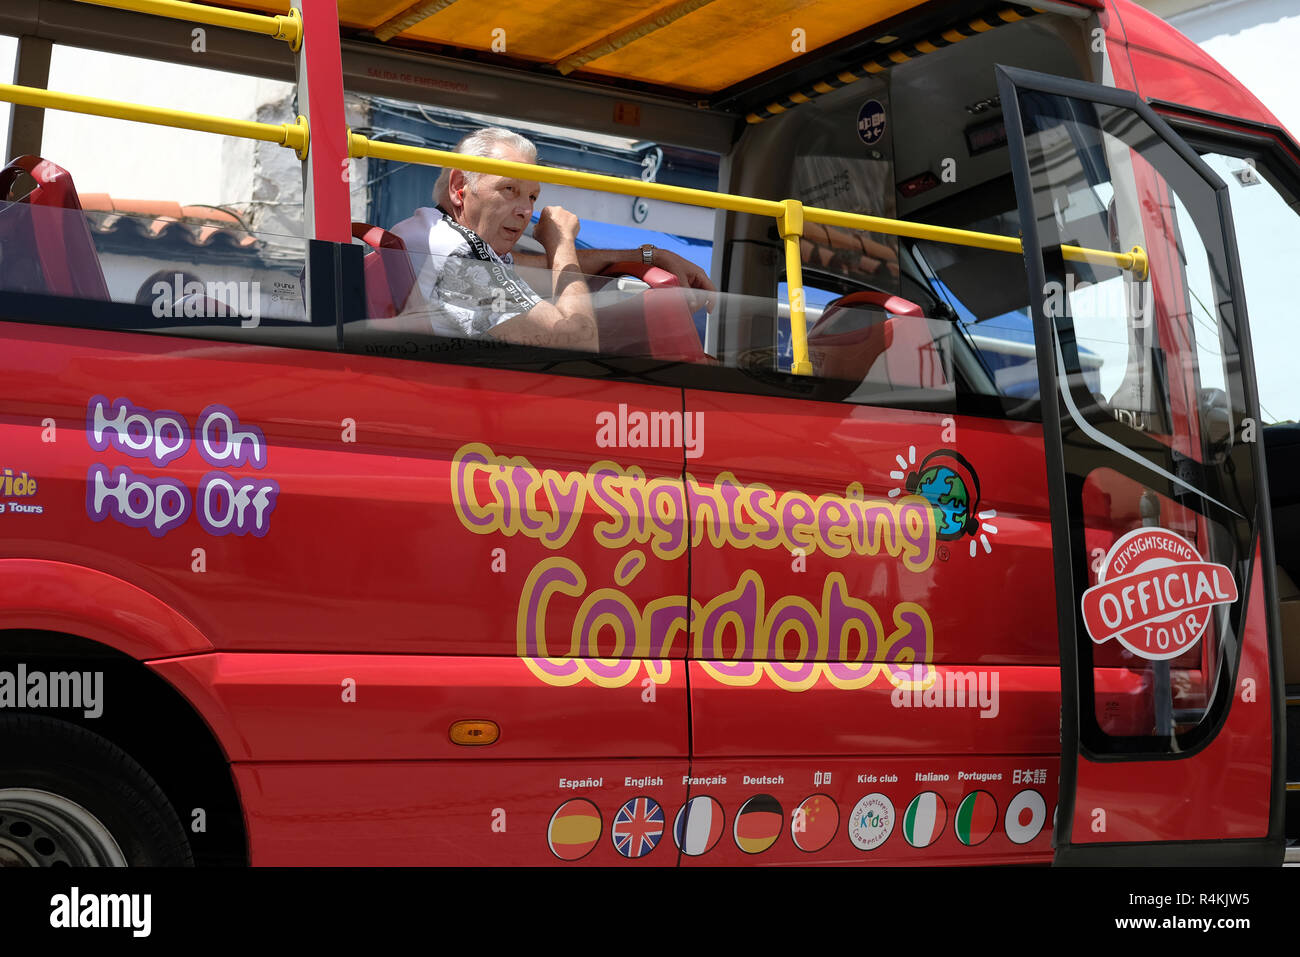 Mann auf Sightseeing Bus in Cordoba, Spanien. Stockfoto